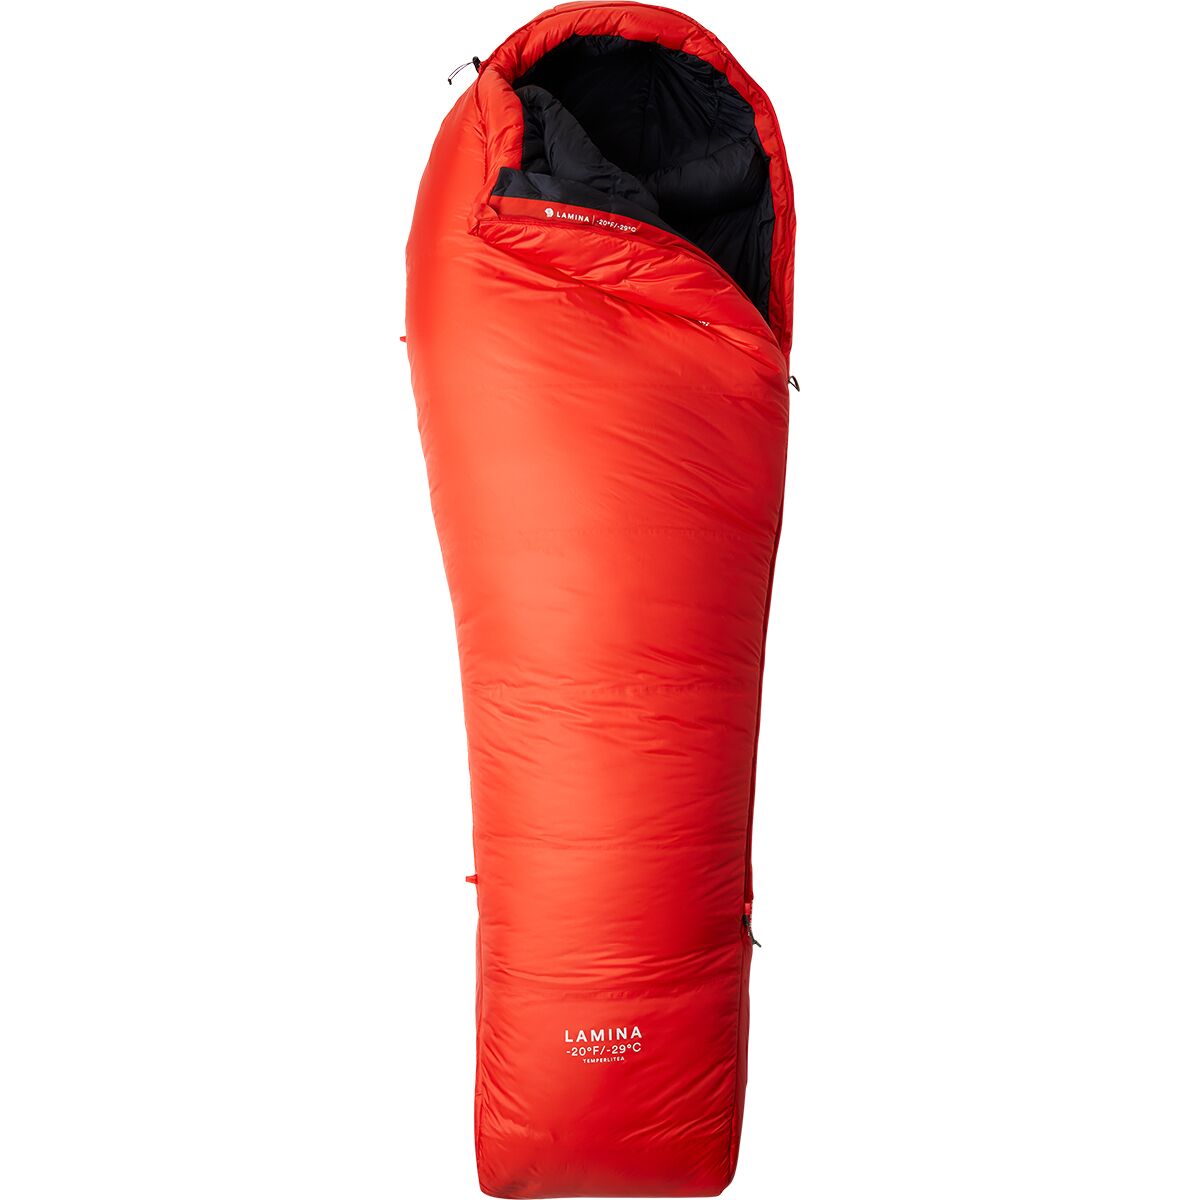 Mountain Hardwear Lamina Sleeping Bag: -20 Synthetic